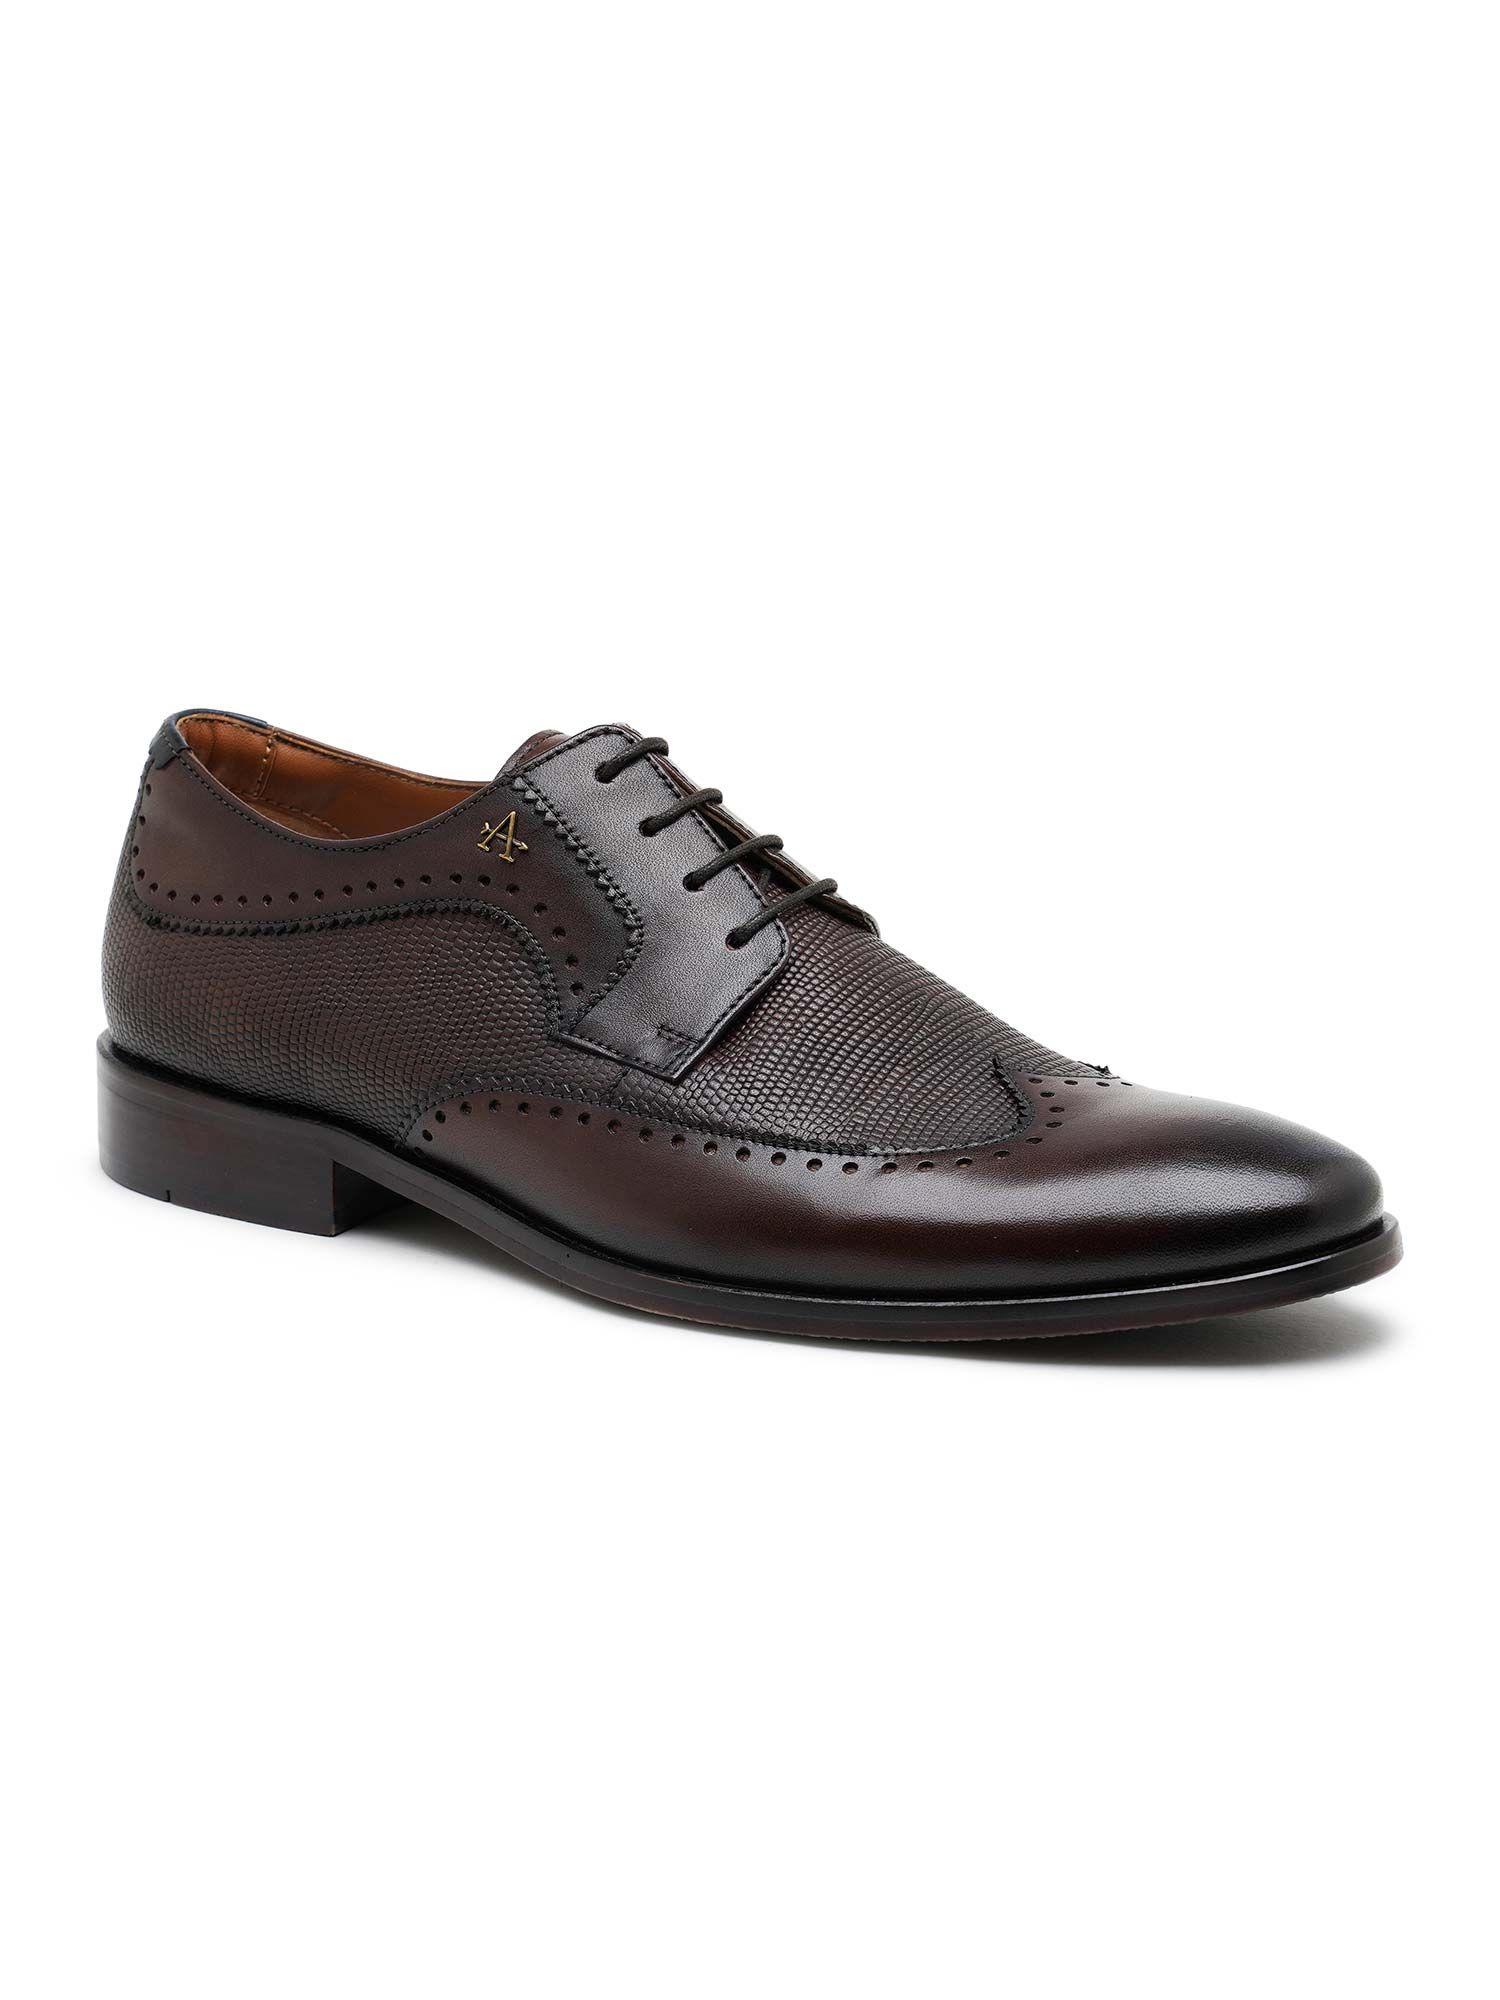 men-boulder-me.-brown-formal-lace-up-shoes